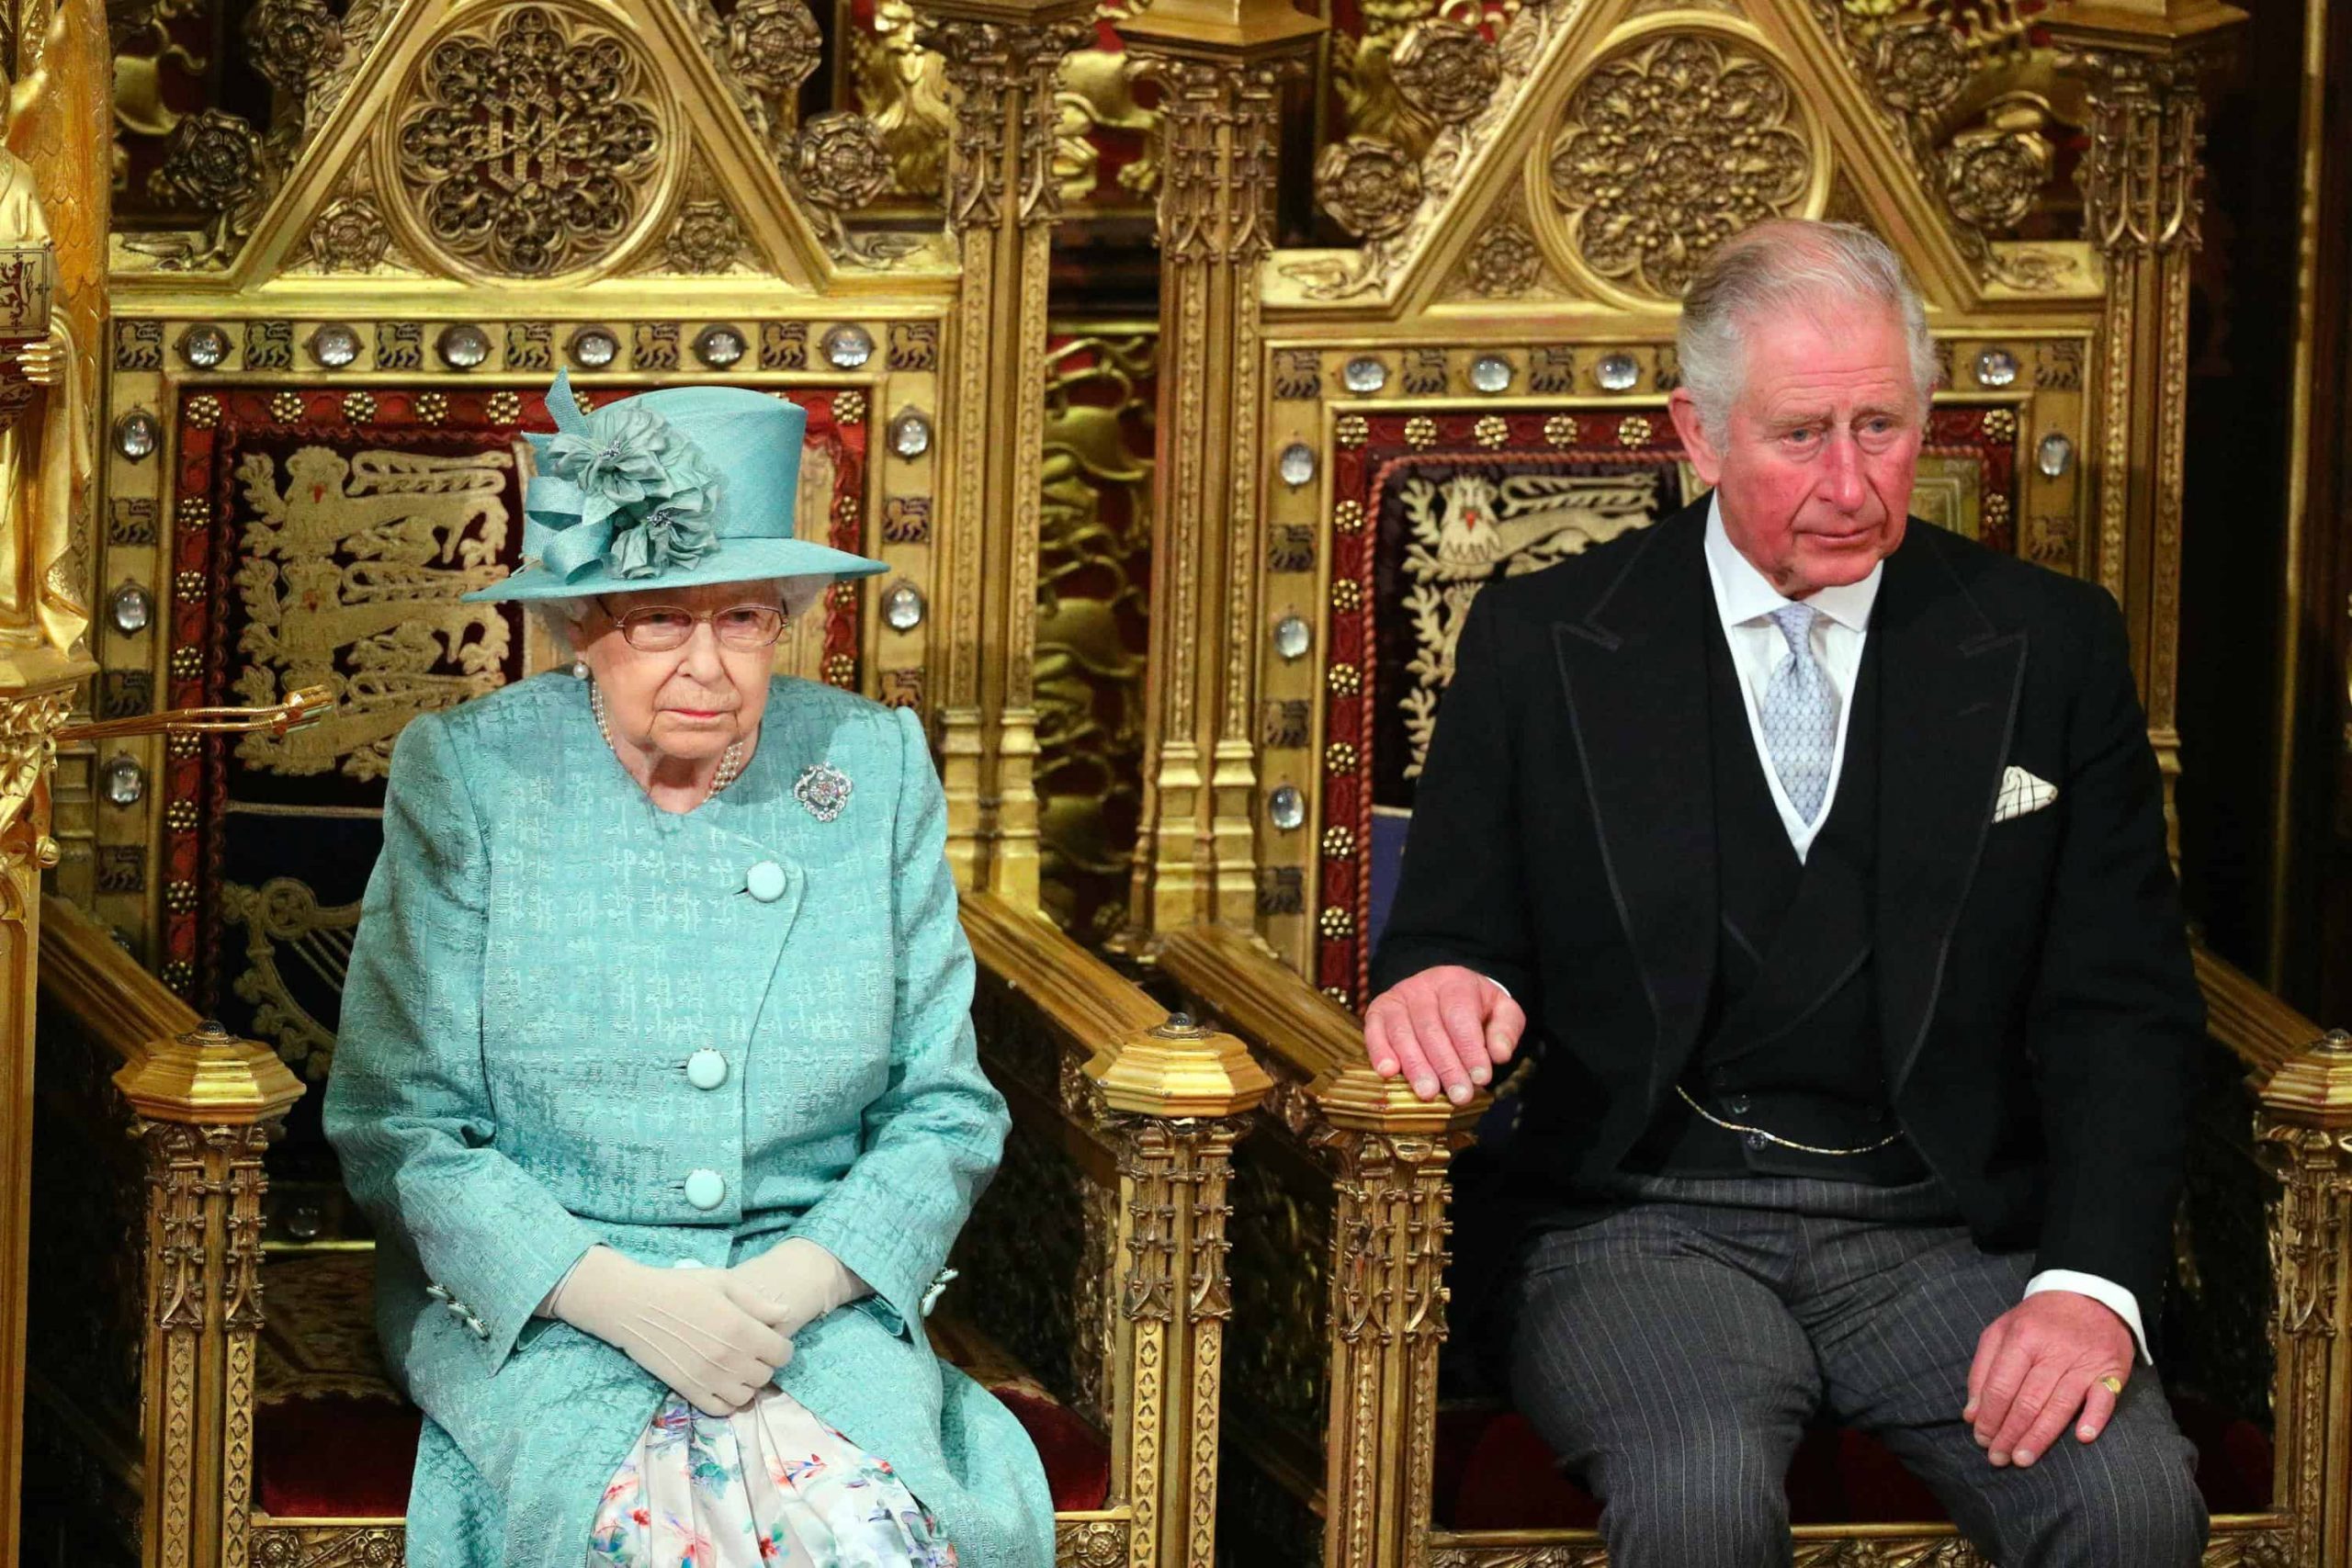 Labour leadership hopeful calls for referendum on royal family